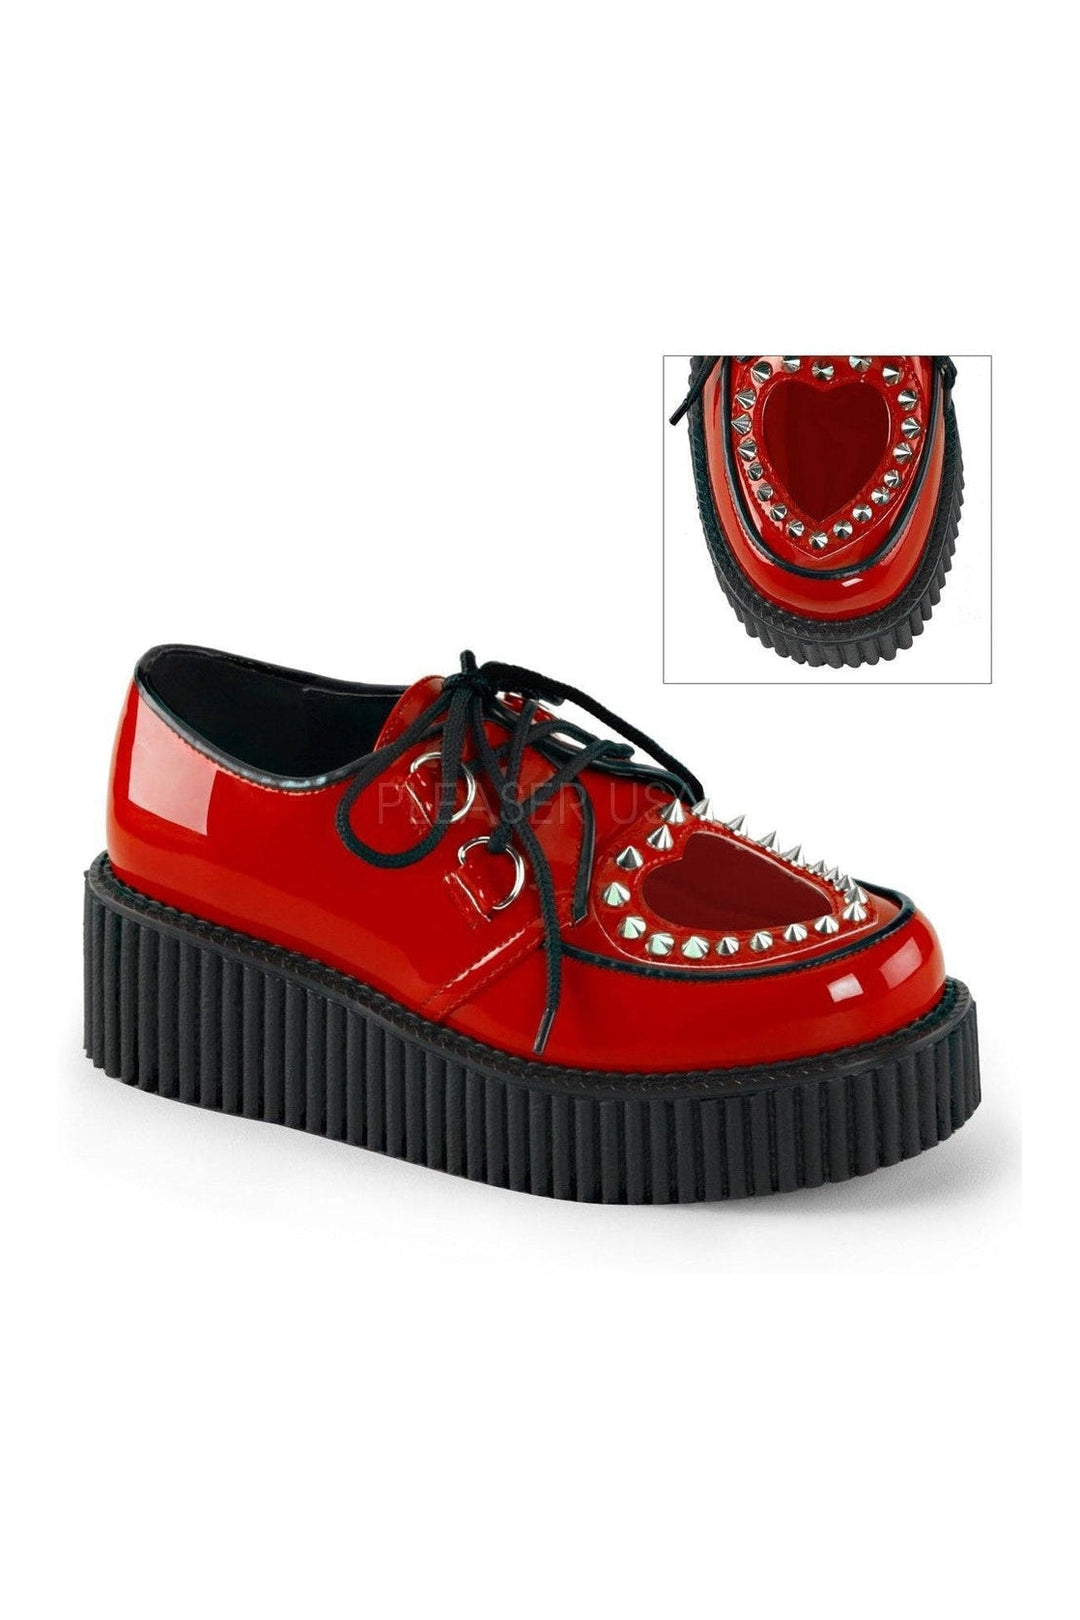 Demonia | CREEPER-108 Gothic Shoe | | Available online | SexyShoes.com – SEXYSHOES.COM